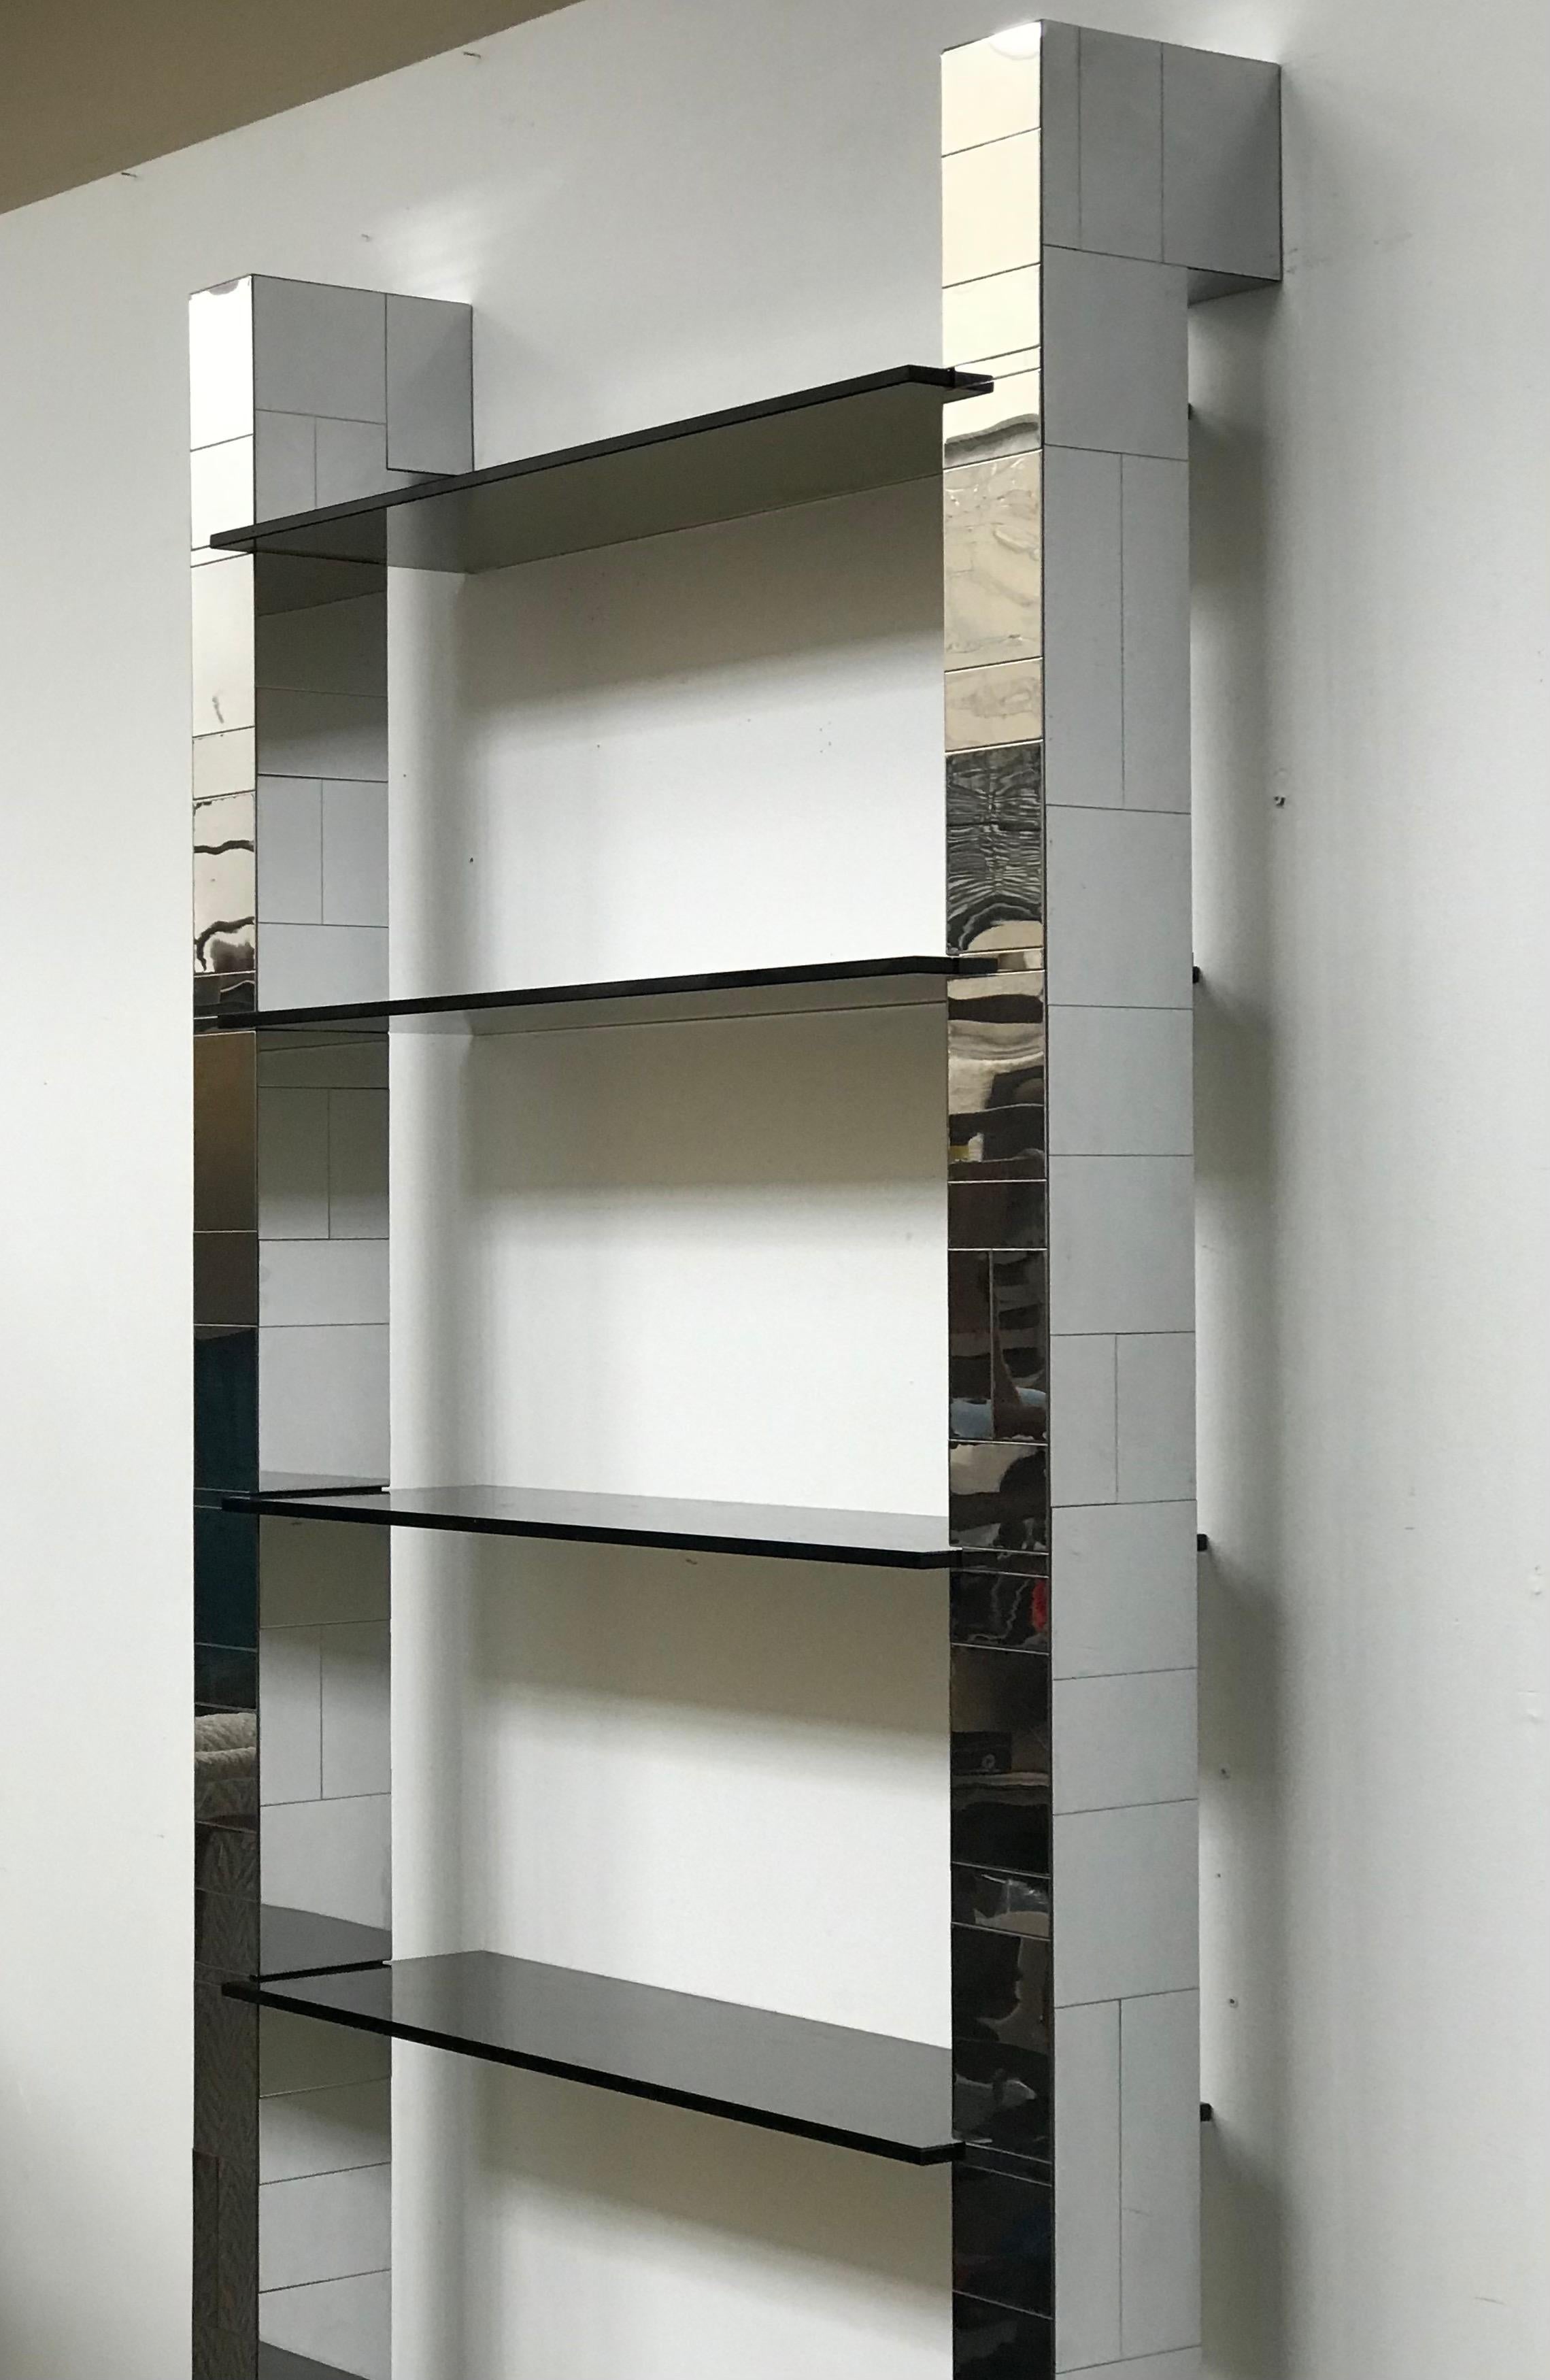 American Paul Evans Cityscape Wall Shelves Display Etagere Bookshelf for Directional